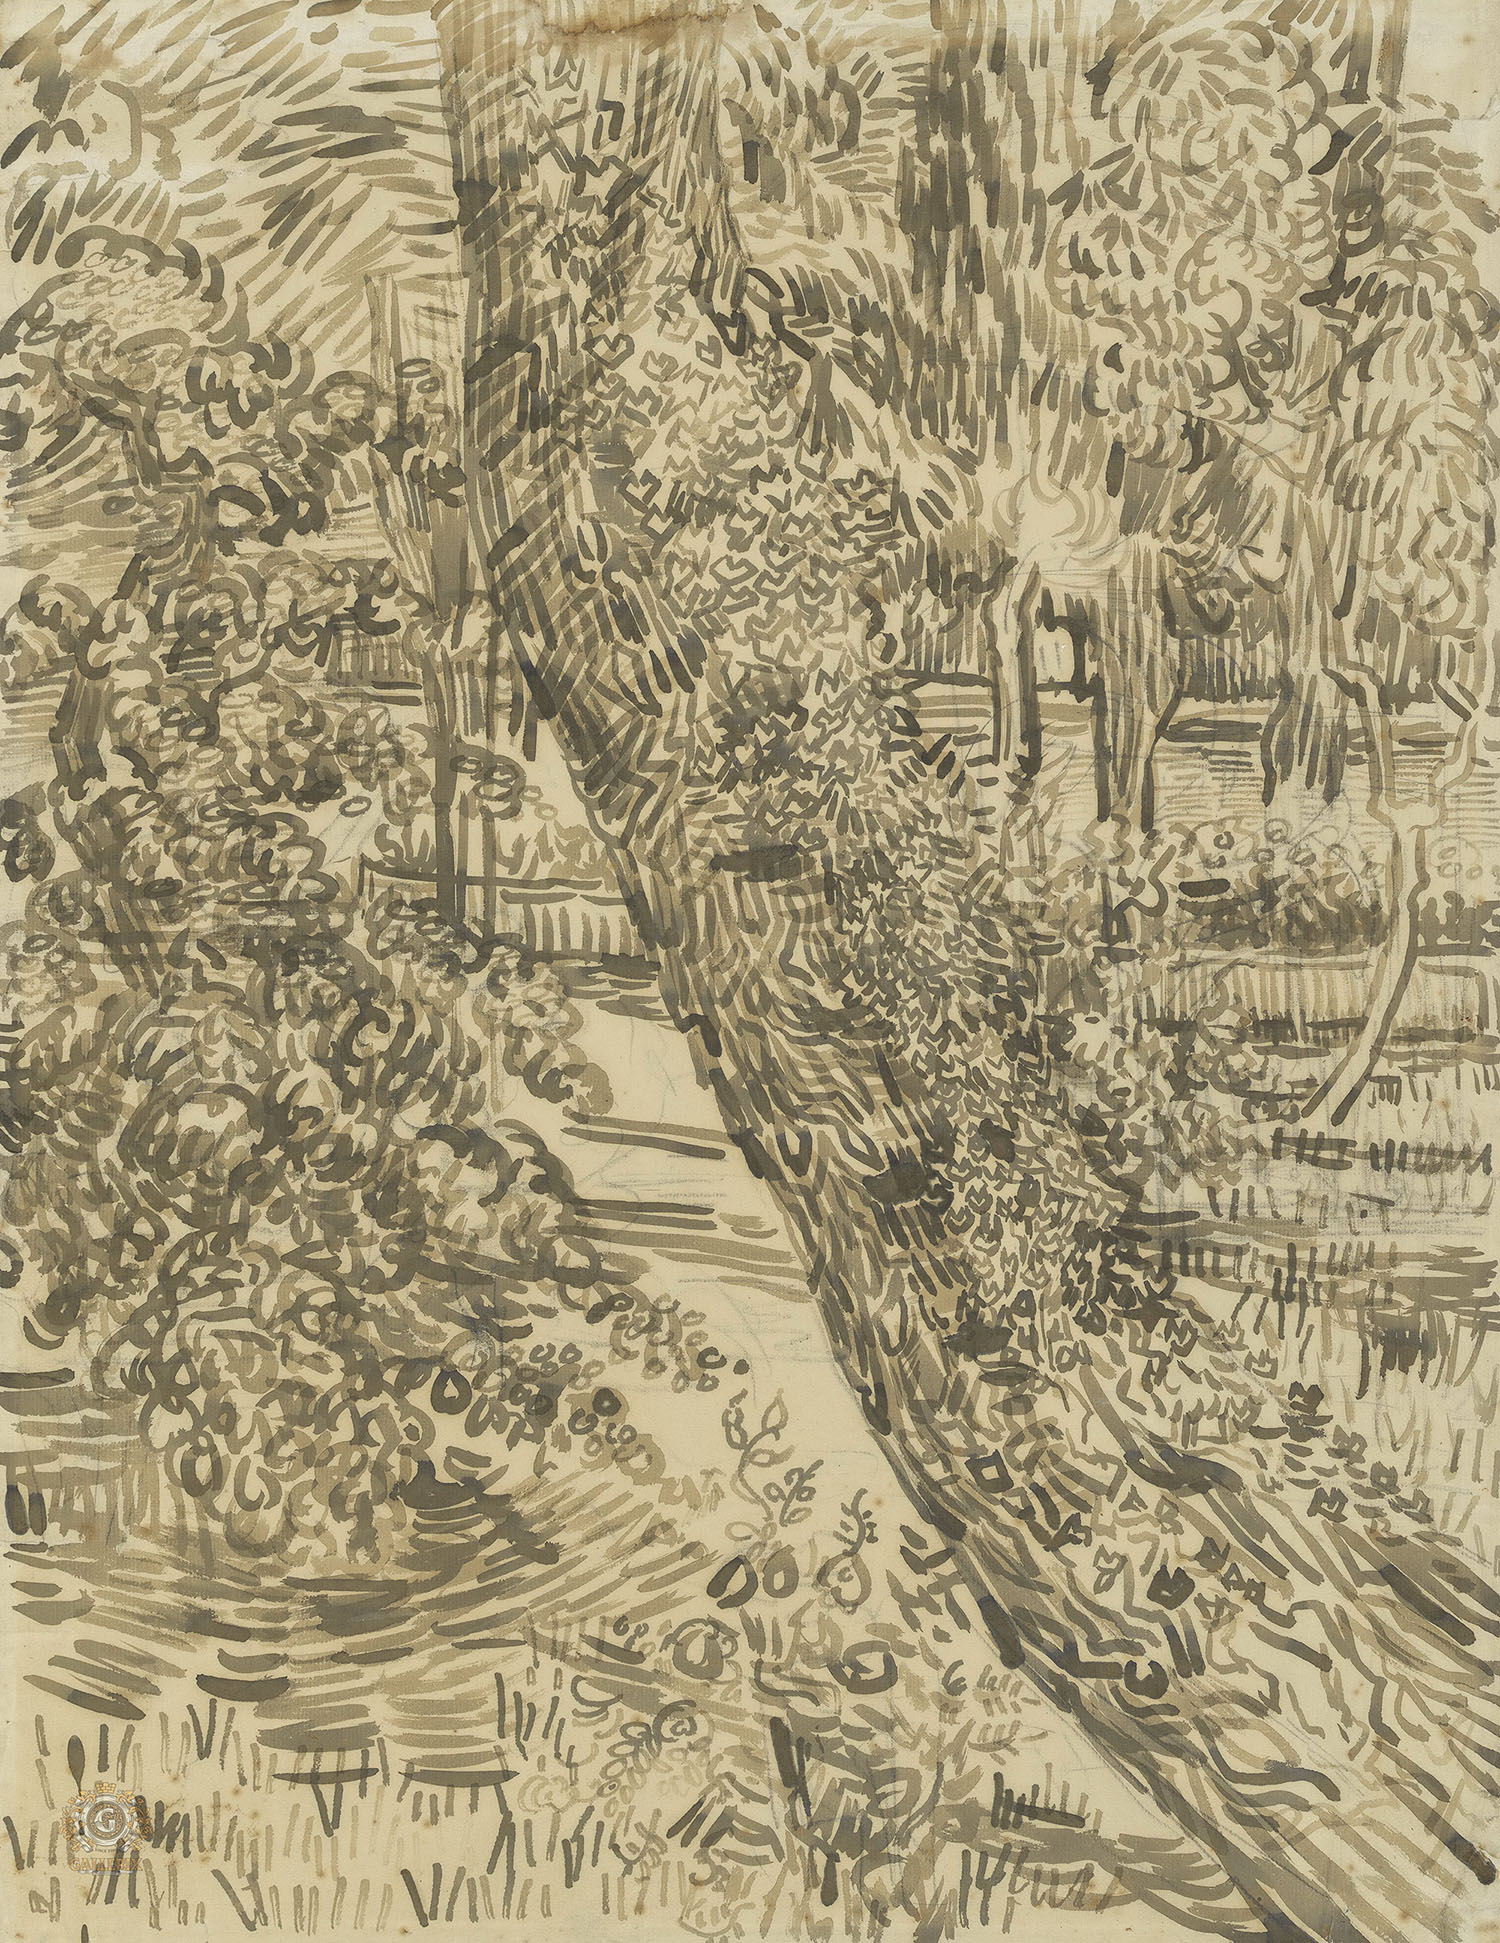 Винсент Ван гог. "Дерево с плющом в саду лечебницы". 1889. Музей Ван Гога, Амстердам.